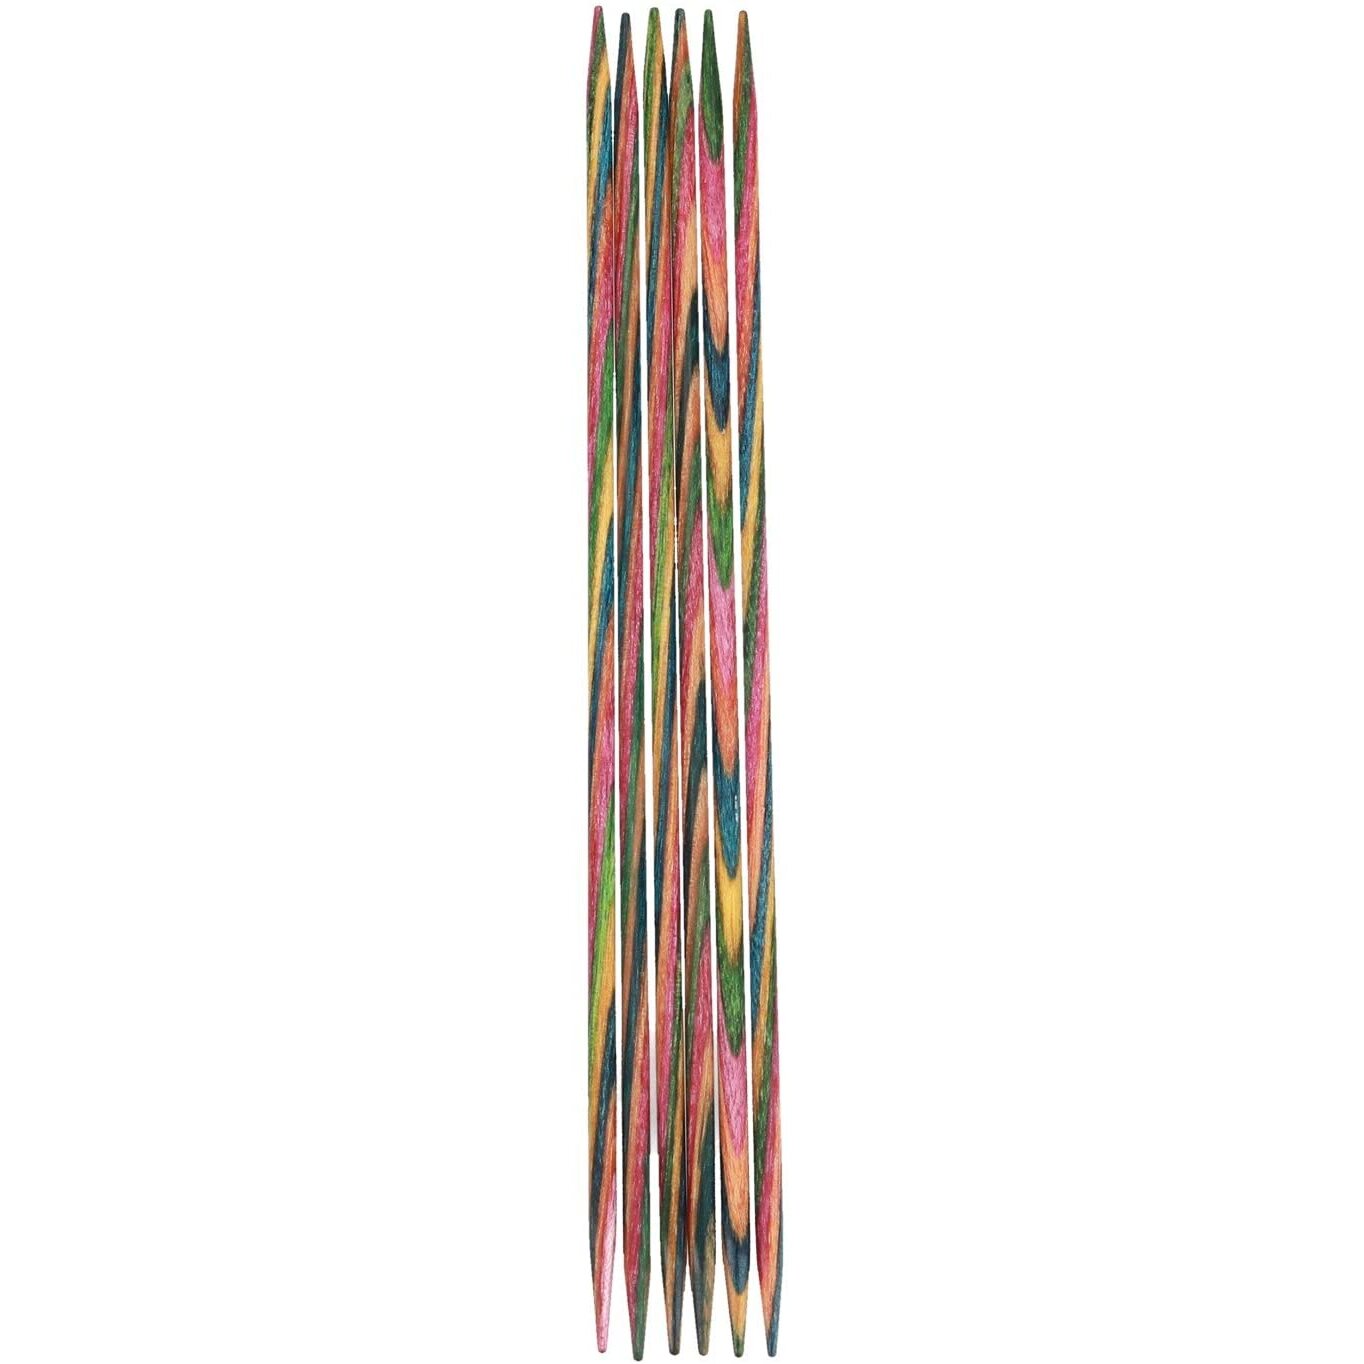 Knit Pro Symfonie Double Point Needles 15cm (Set of 6) - 3.00mm